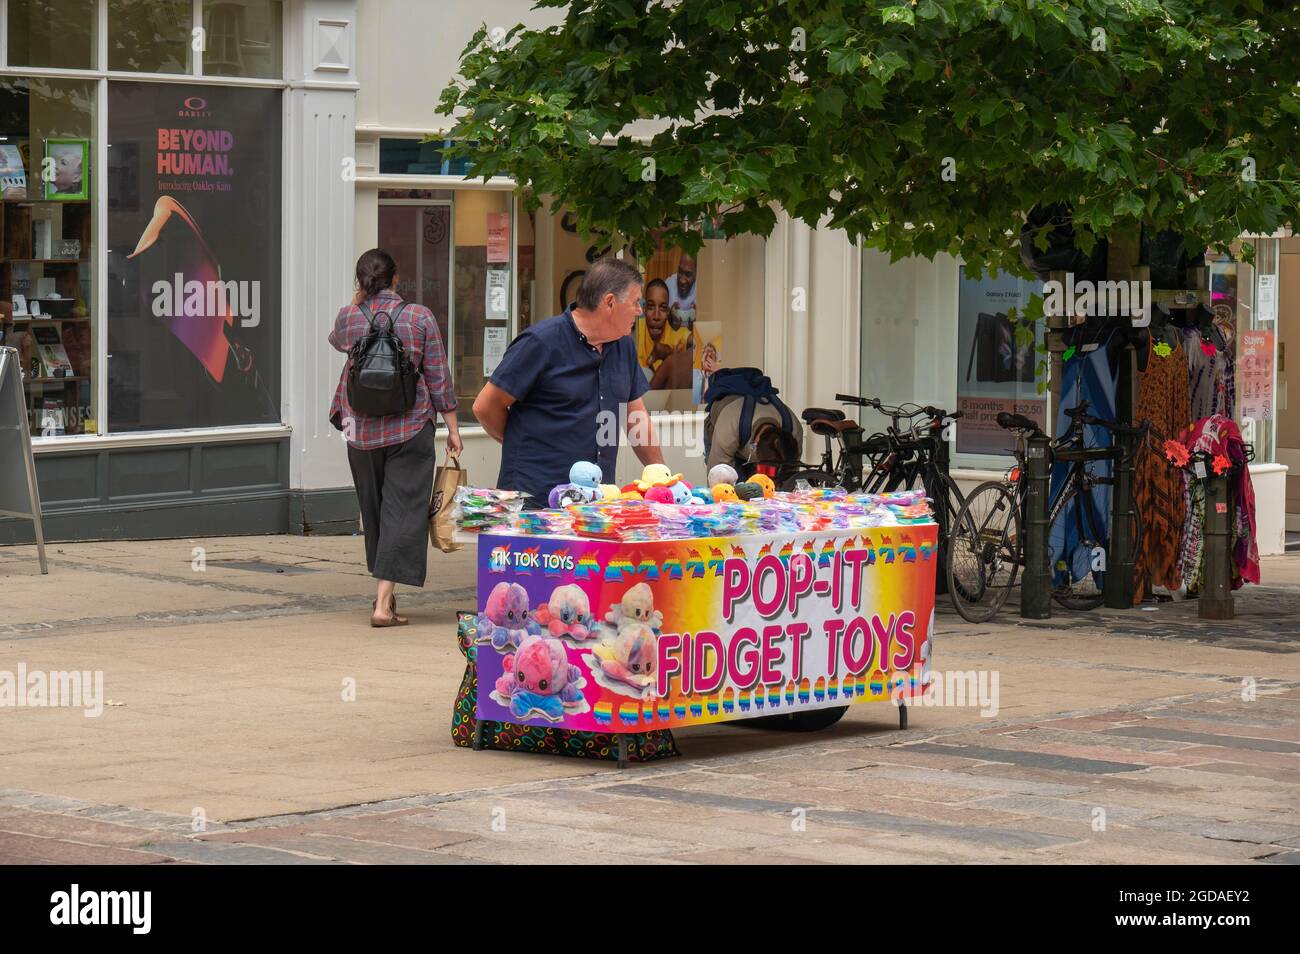 Pop it fidget toy trader in Leeds city centre Stock Photo - Alamy